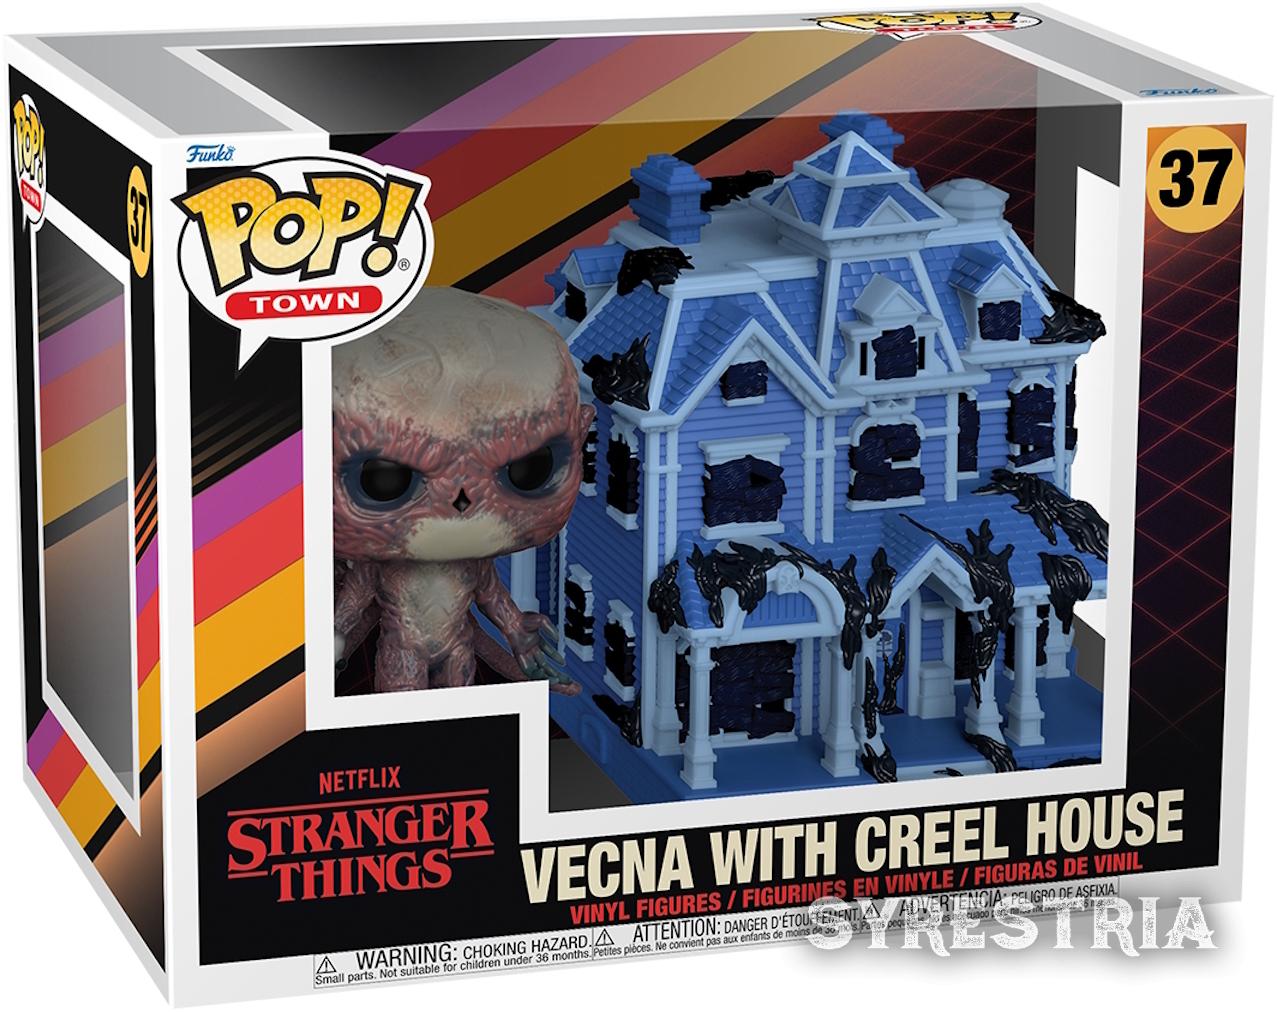 Stranger Things - Vecna with Creel House 37  - Funko Pop! Town Vinyl Figur